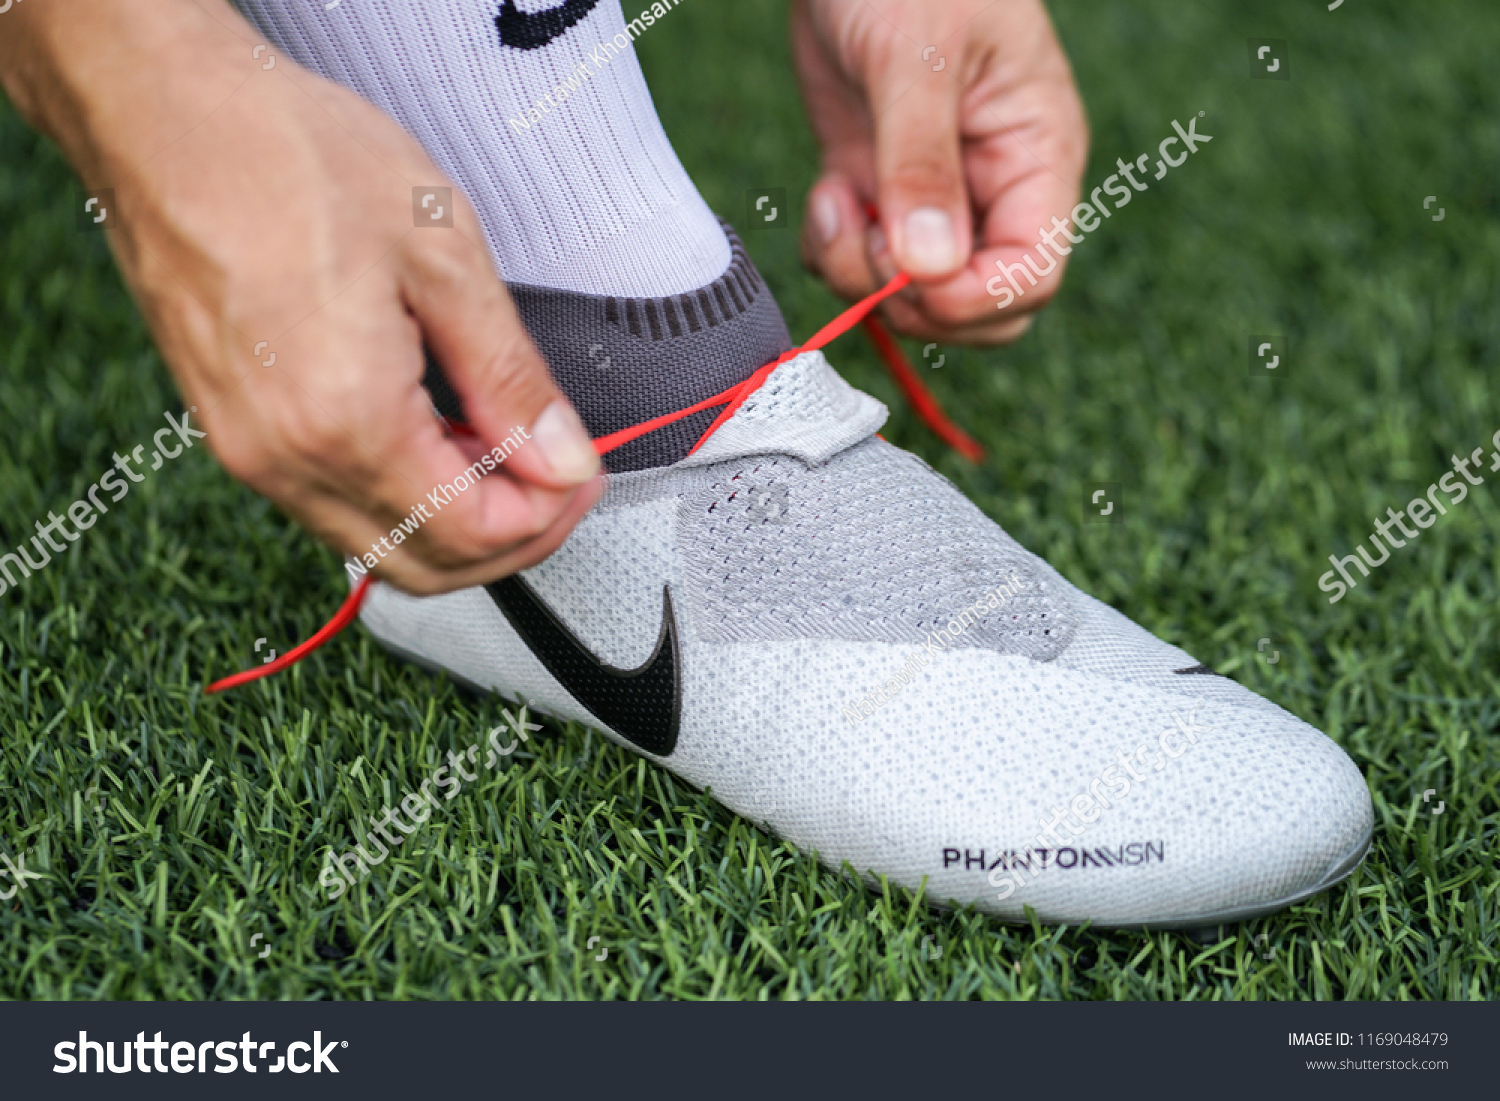 New Nike Hypervenom Phantom III FG Football Boots Red Black